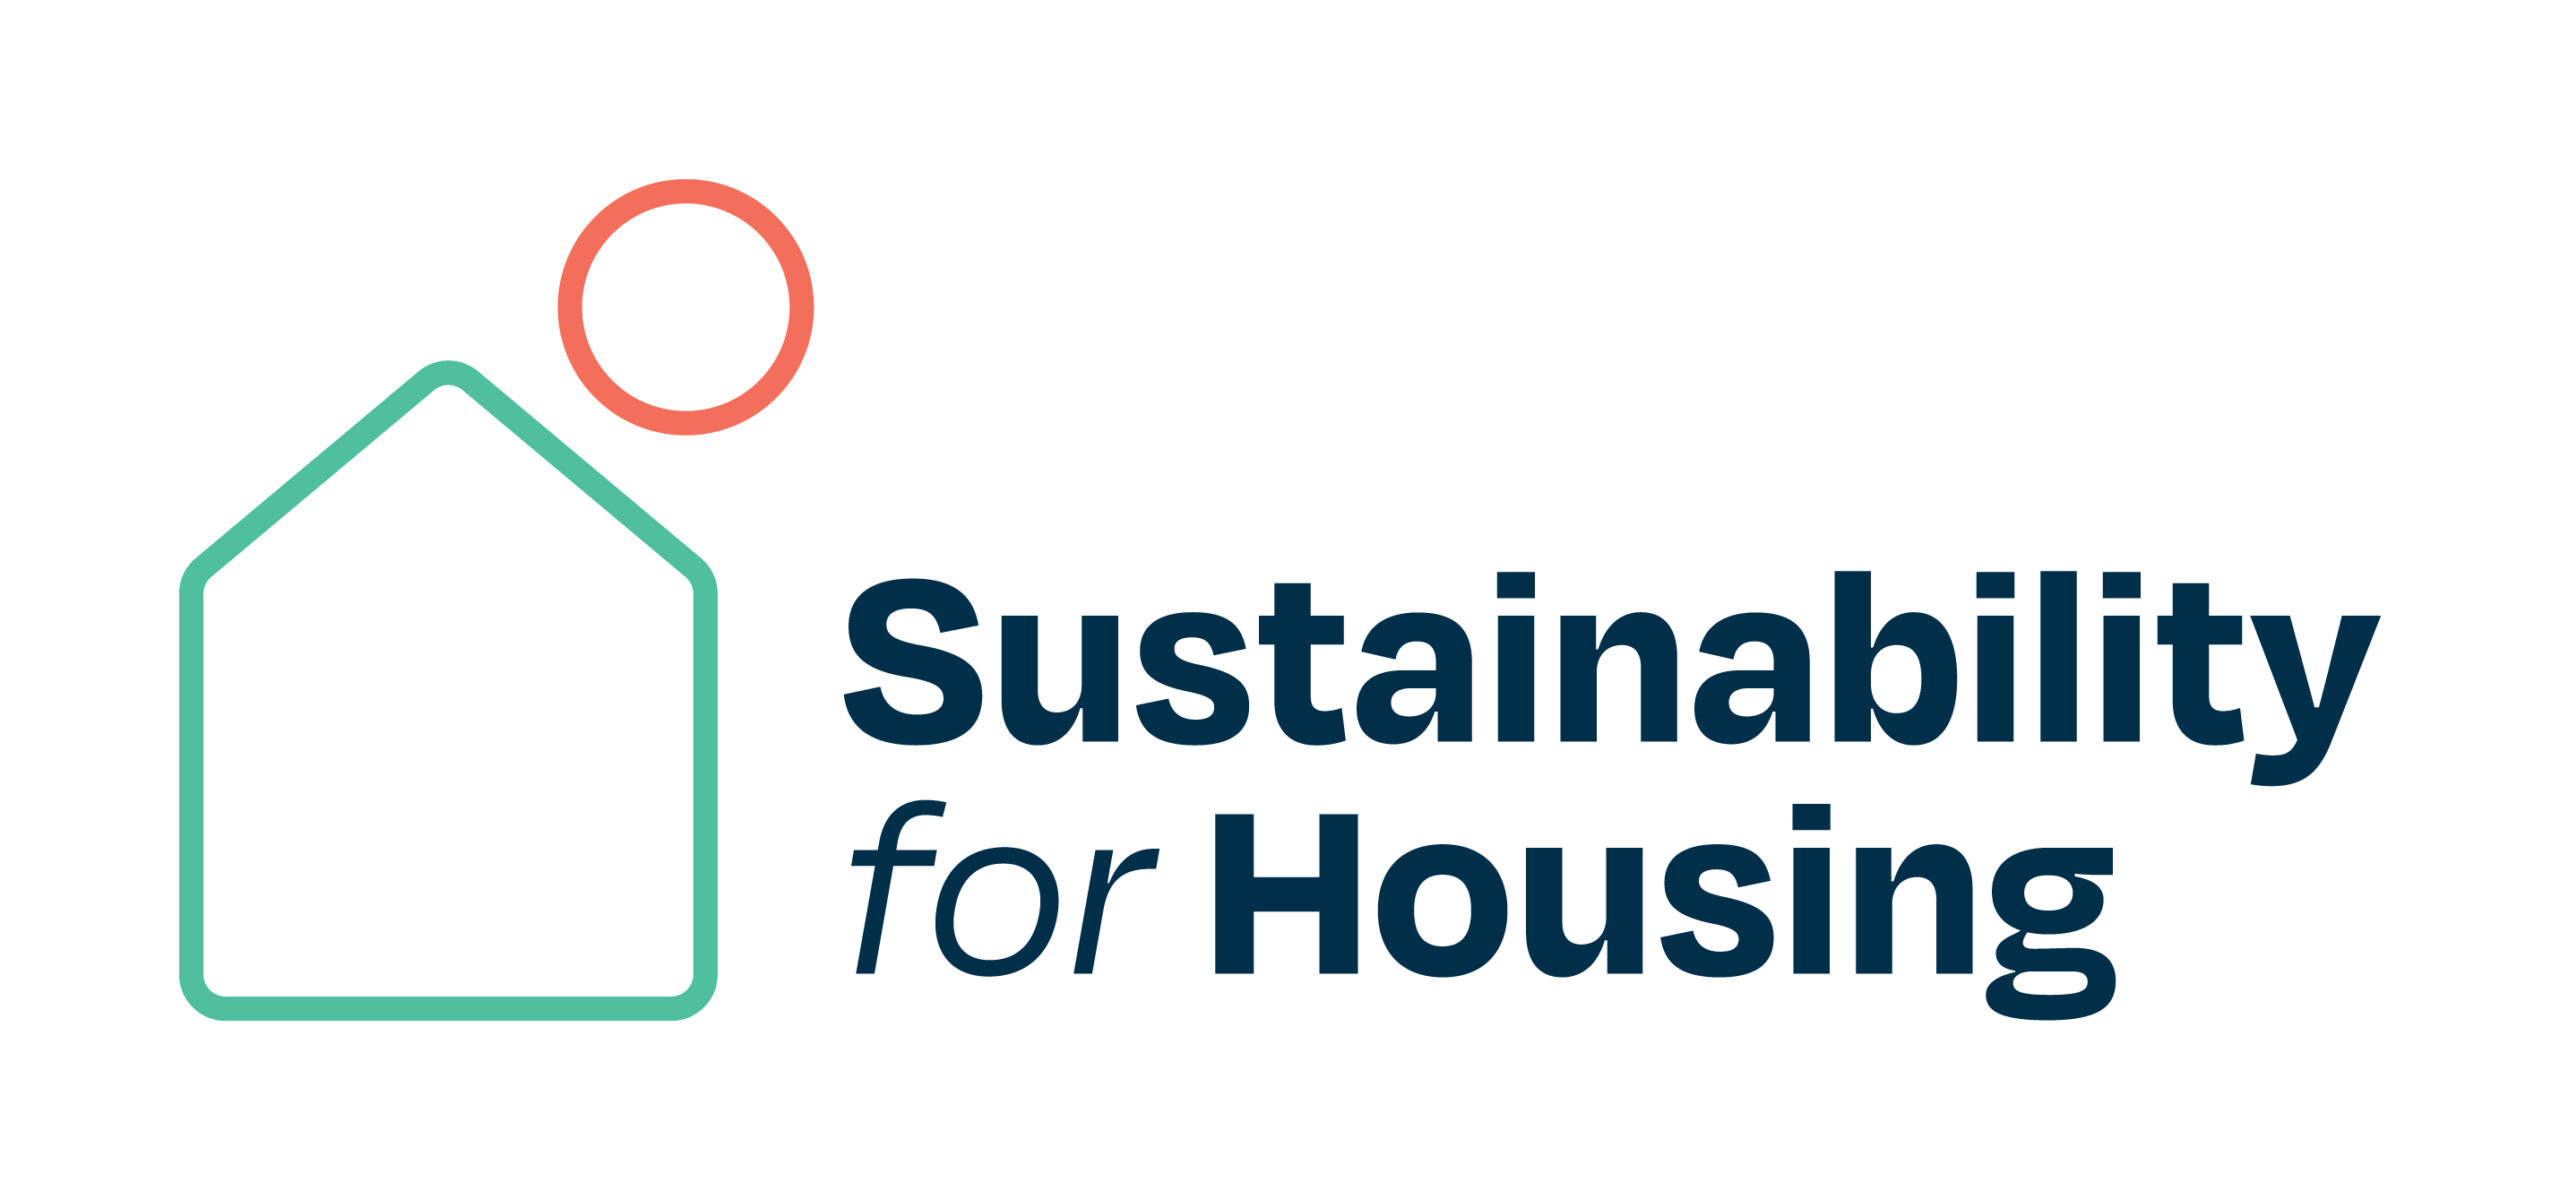 UK housing ESG framework updated in response to sector priorities